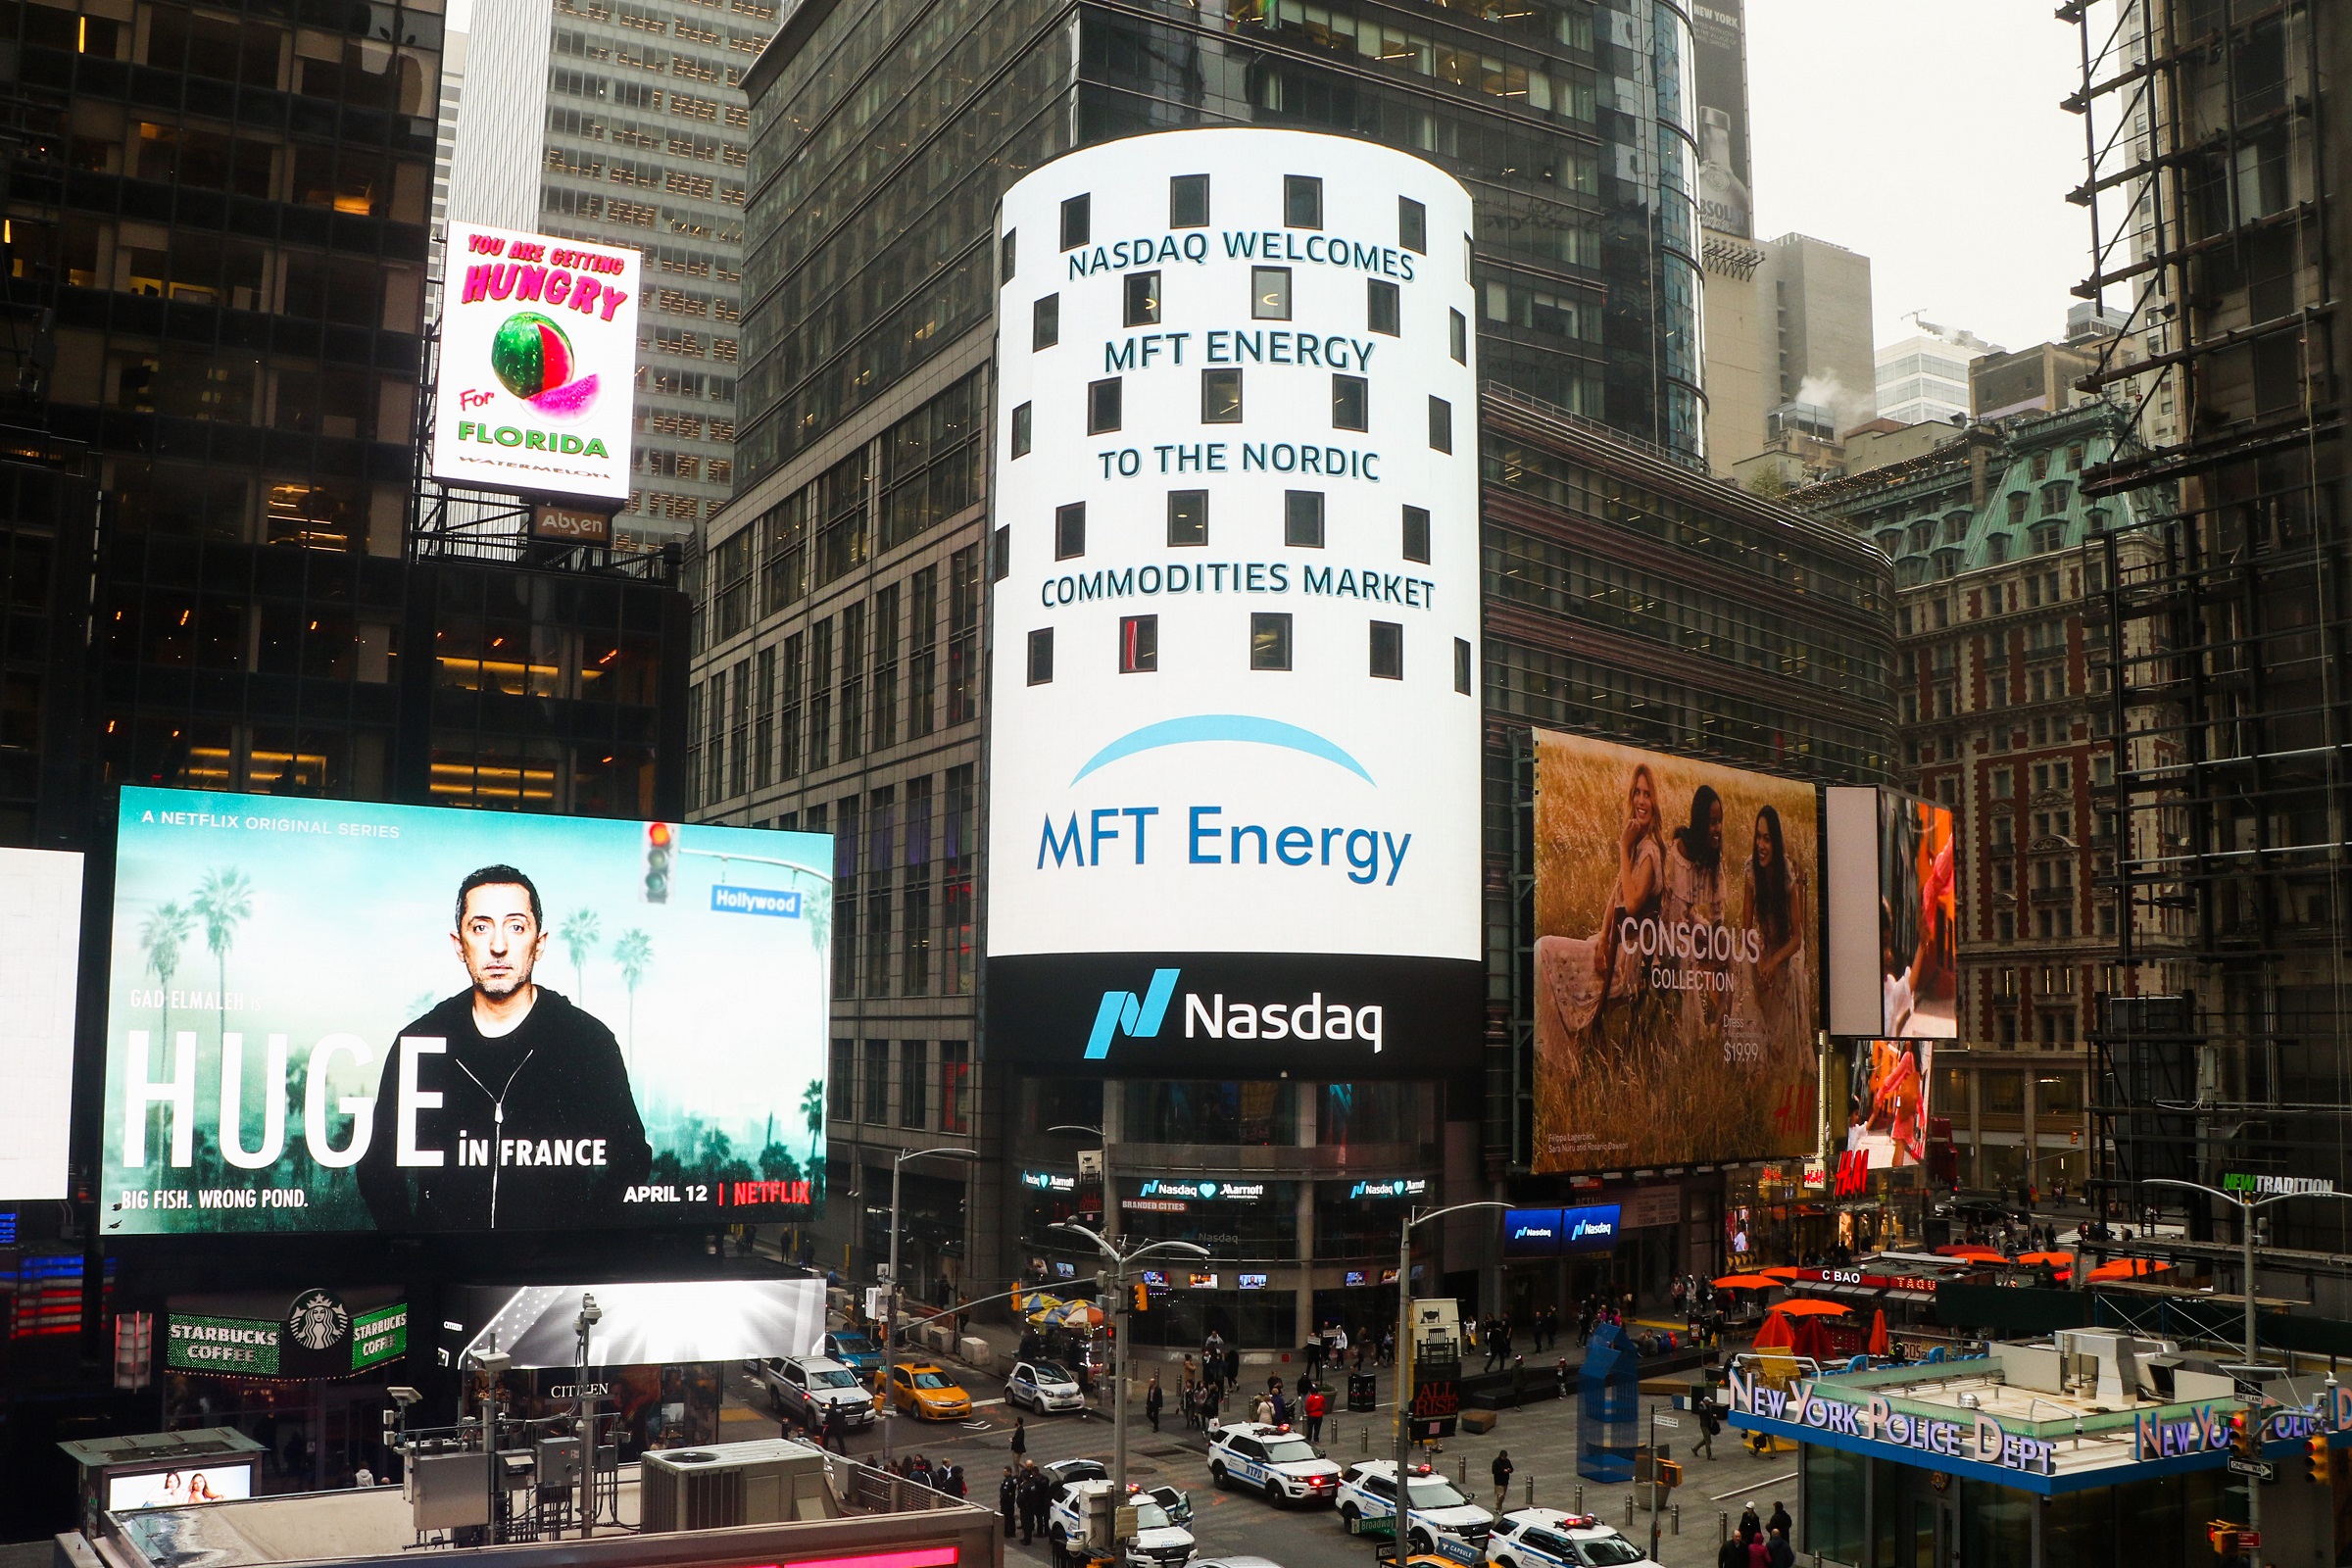 Nasdaq Commodities Welcomes MFT Energy